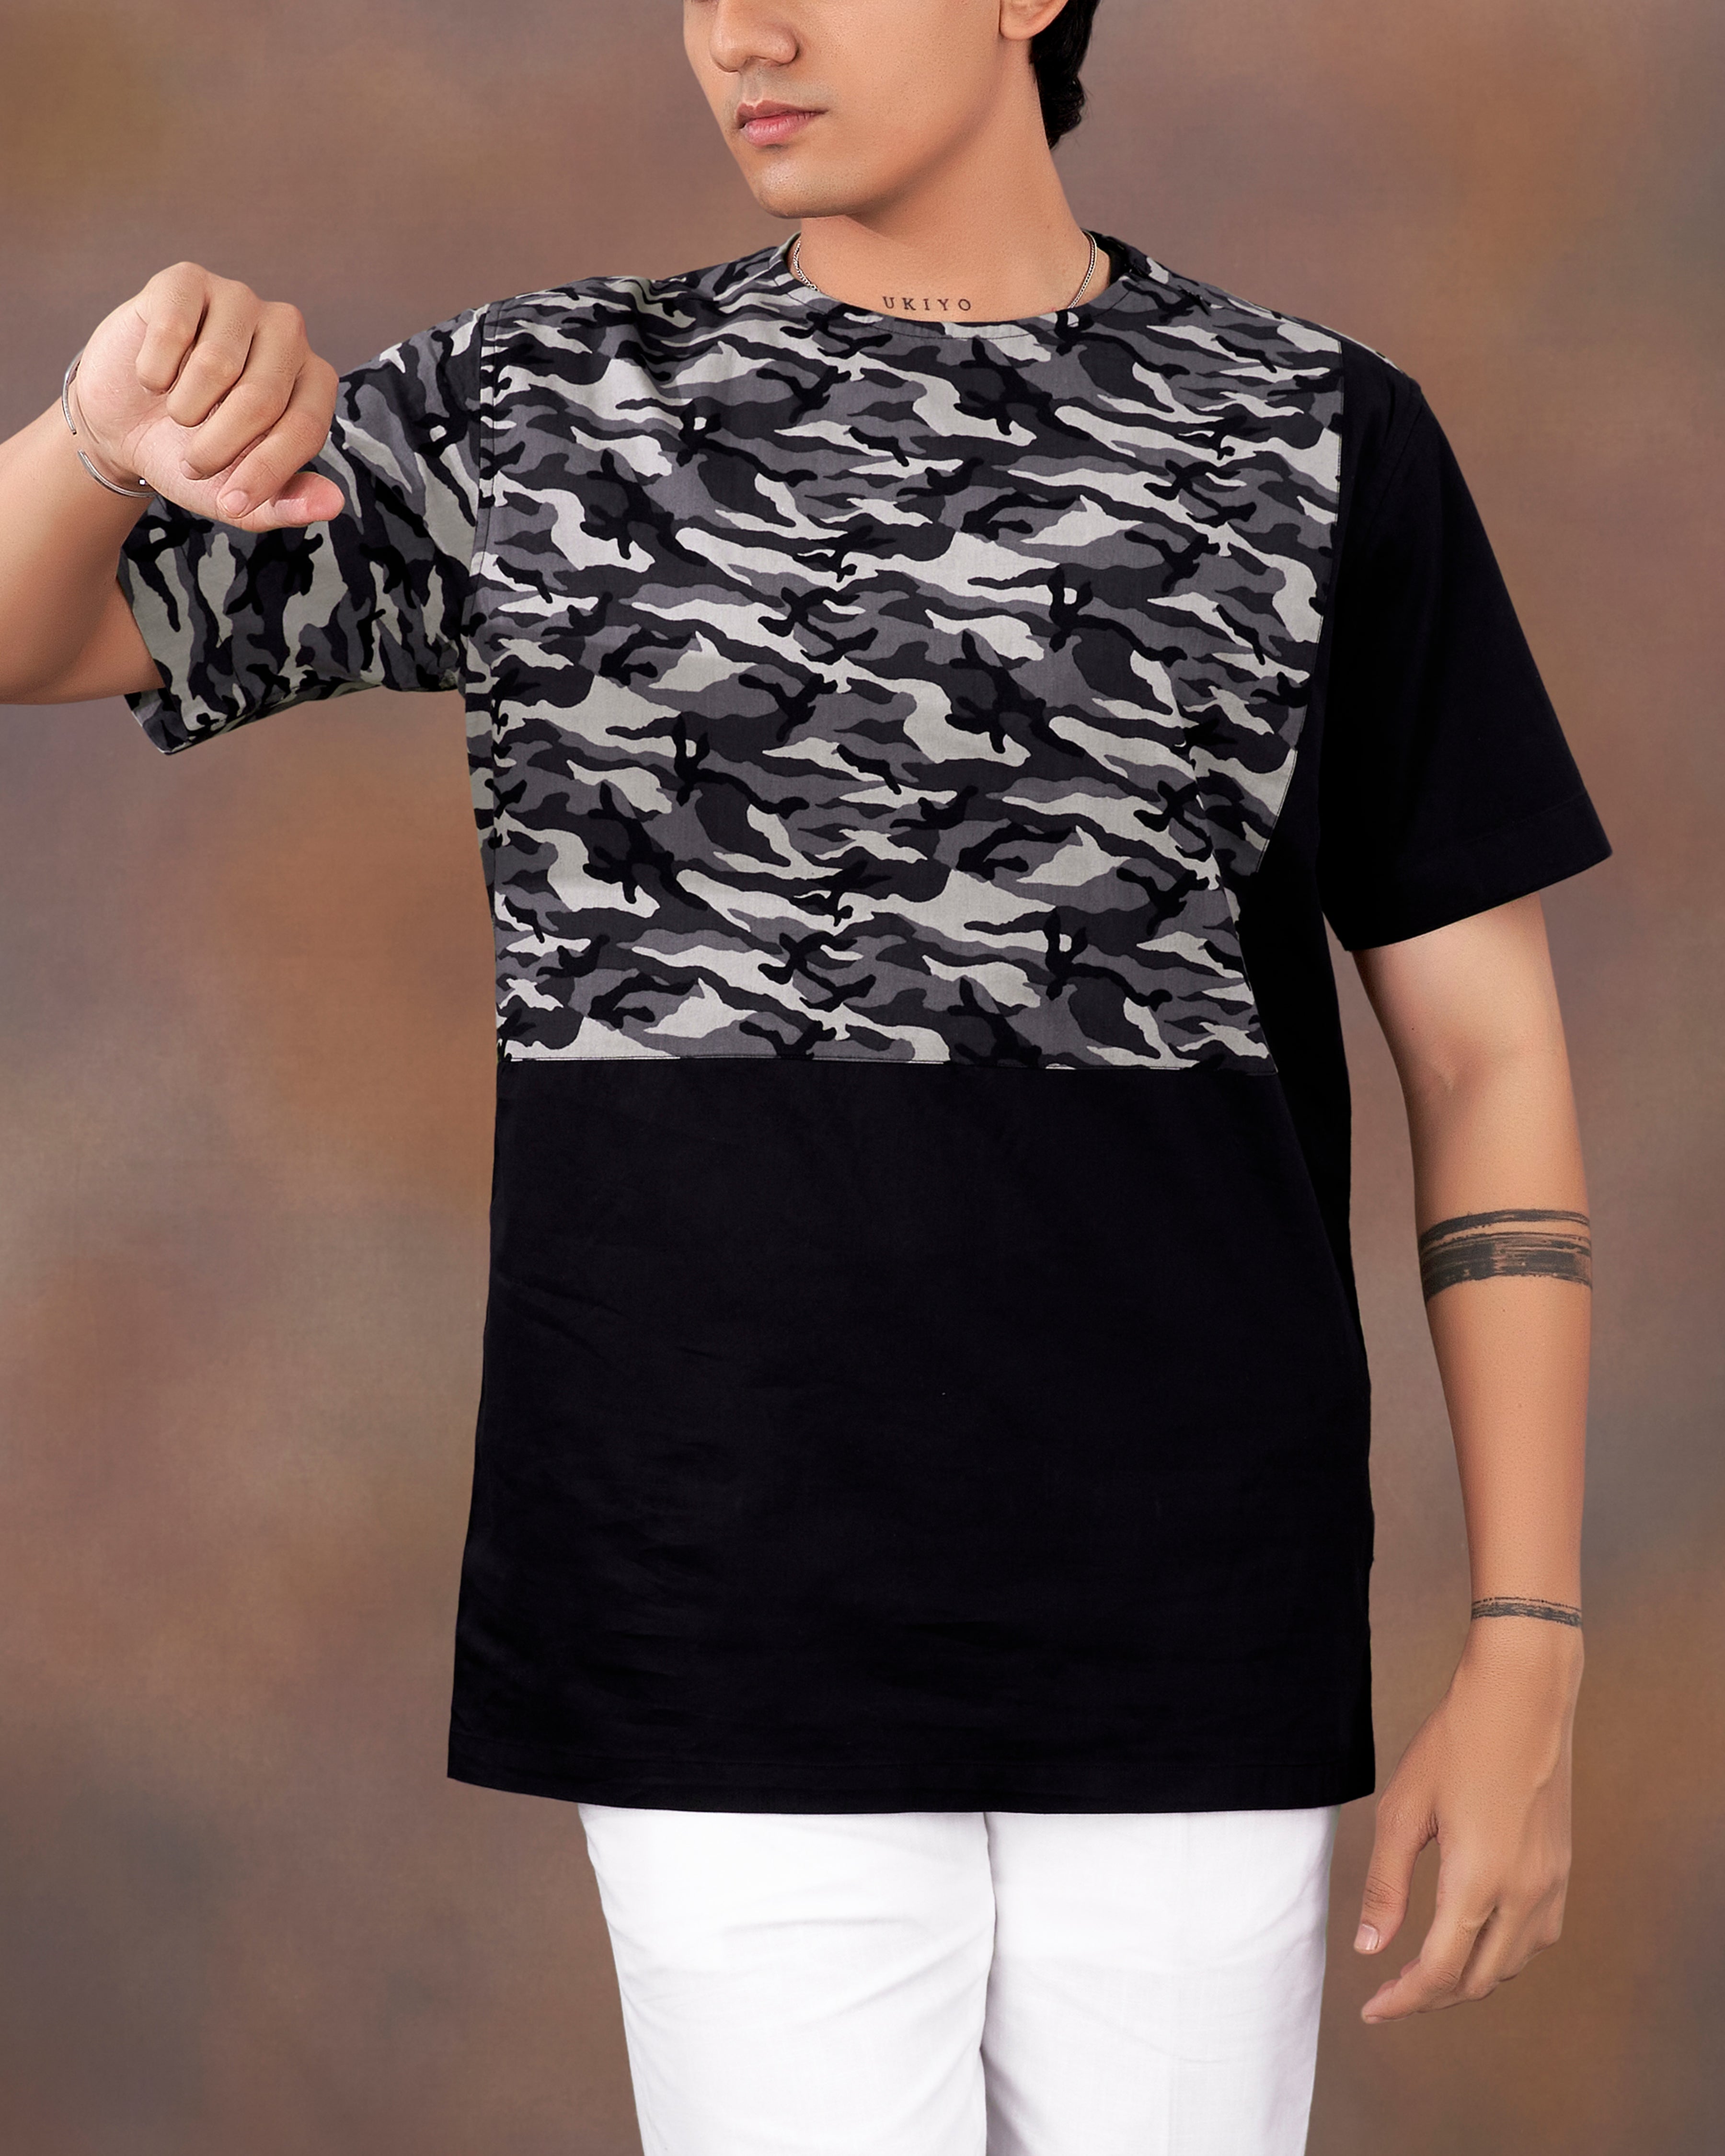 Half Camouflage Printed and Half-Black Royal Oxford Designer Bush Shirt